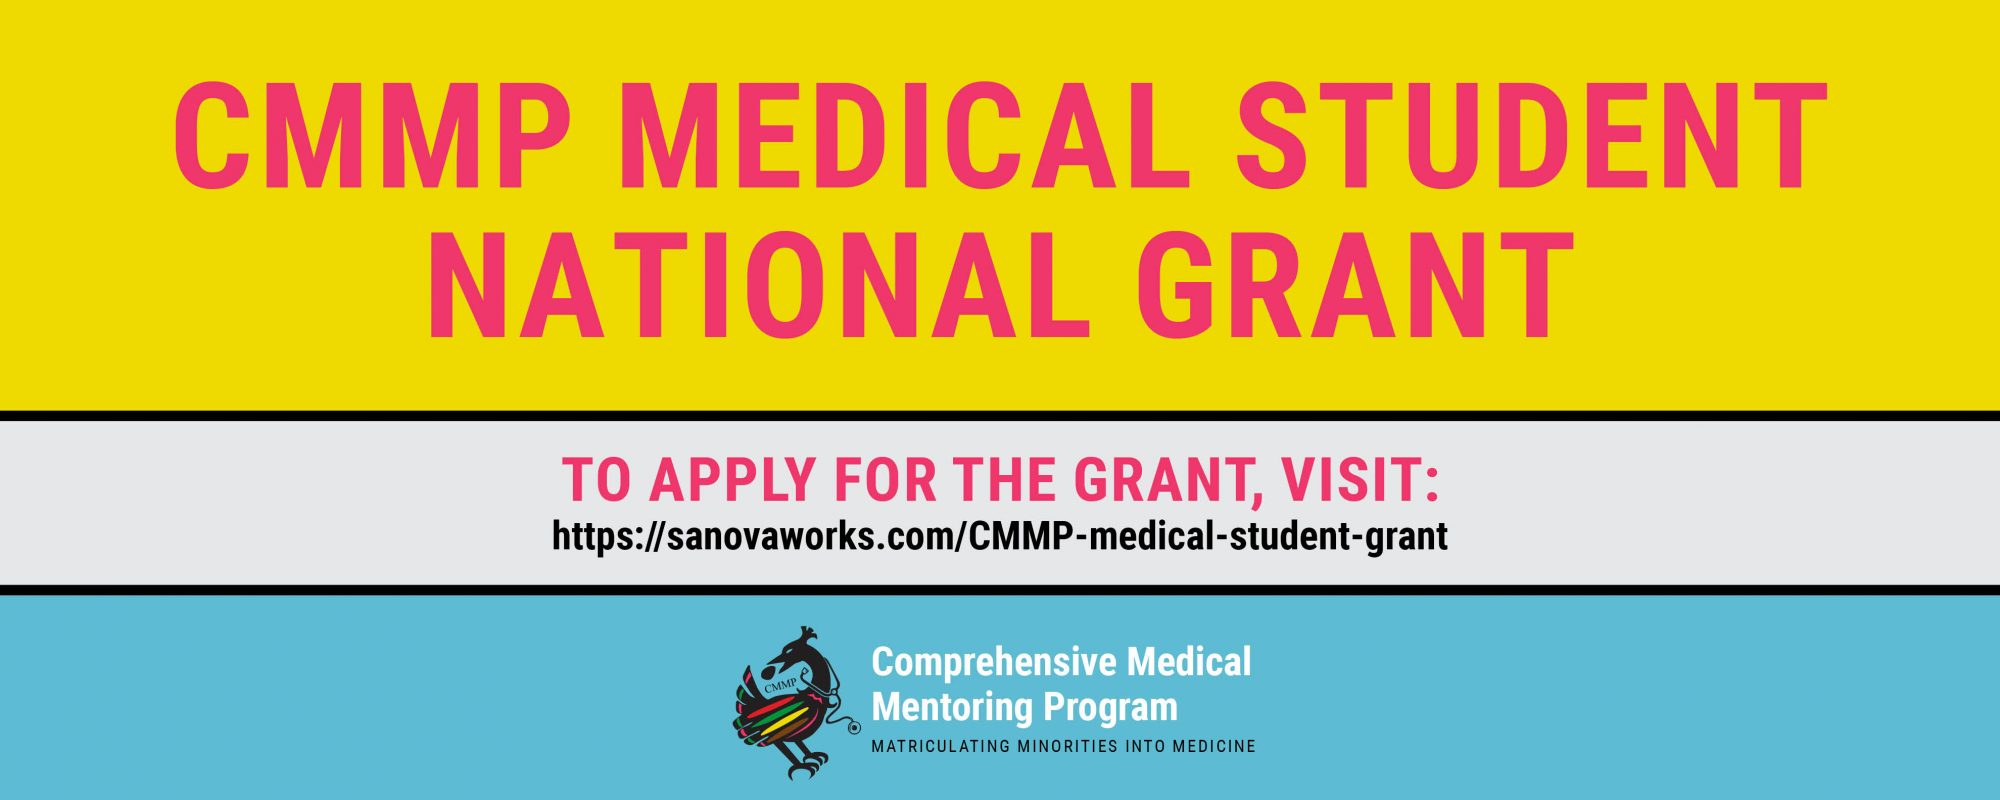 CMMP Medical Student National Grant